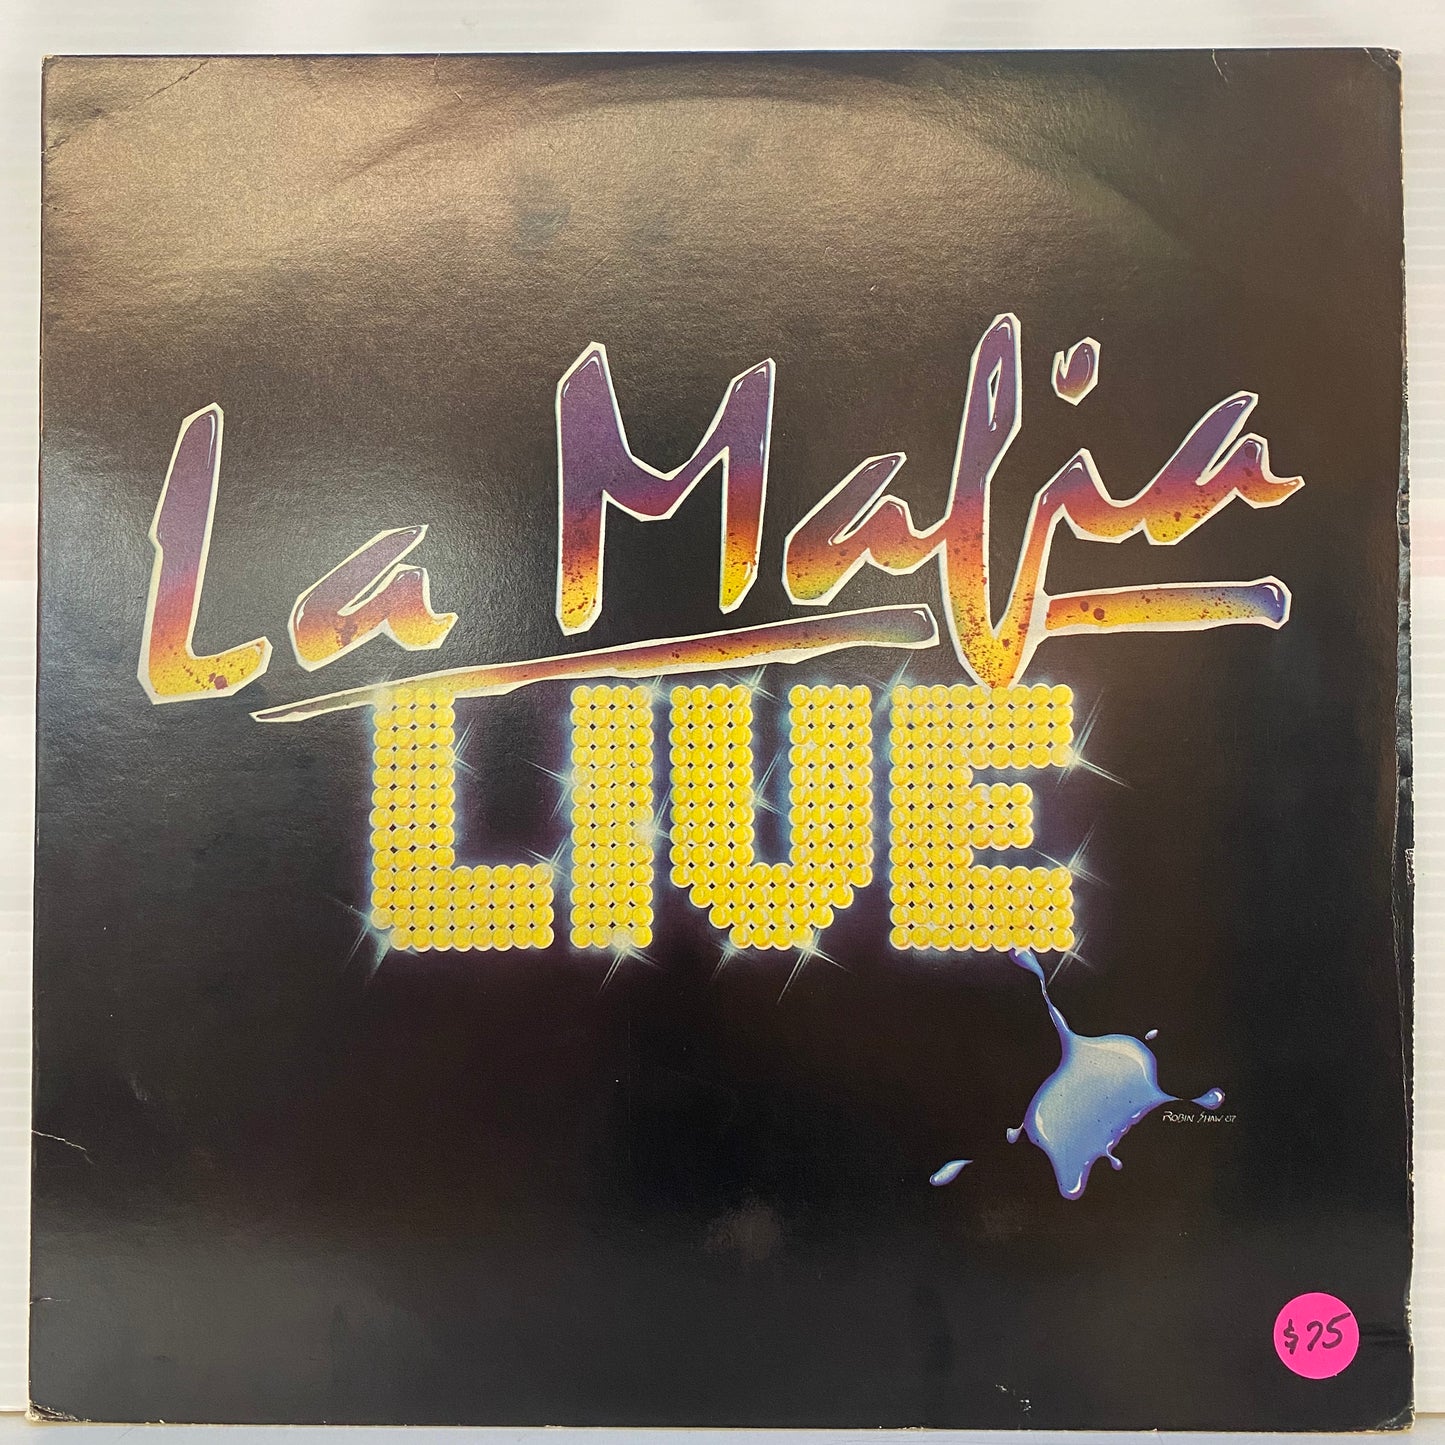 La Mafia - Live (Vinyl)